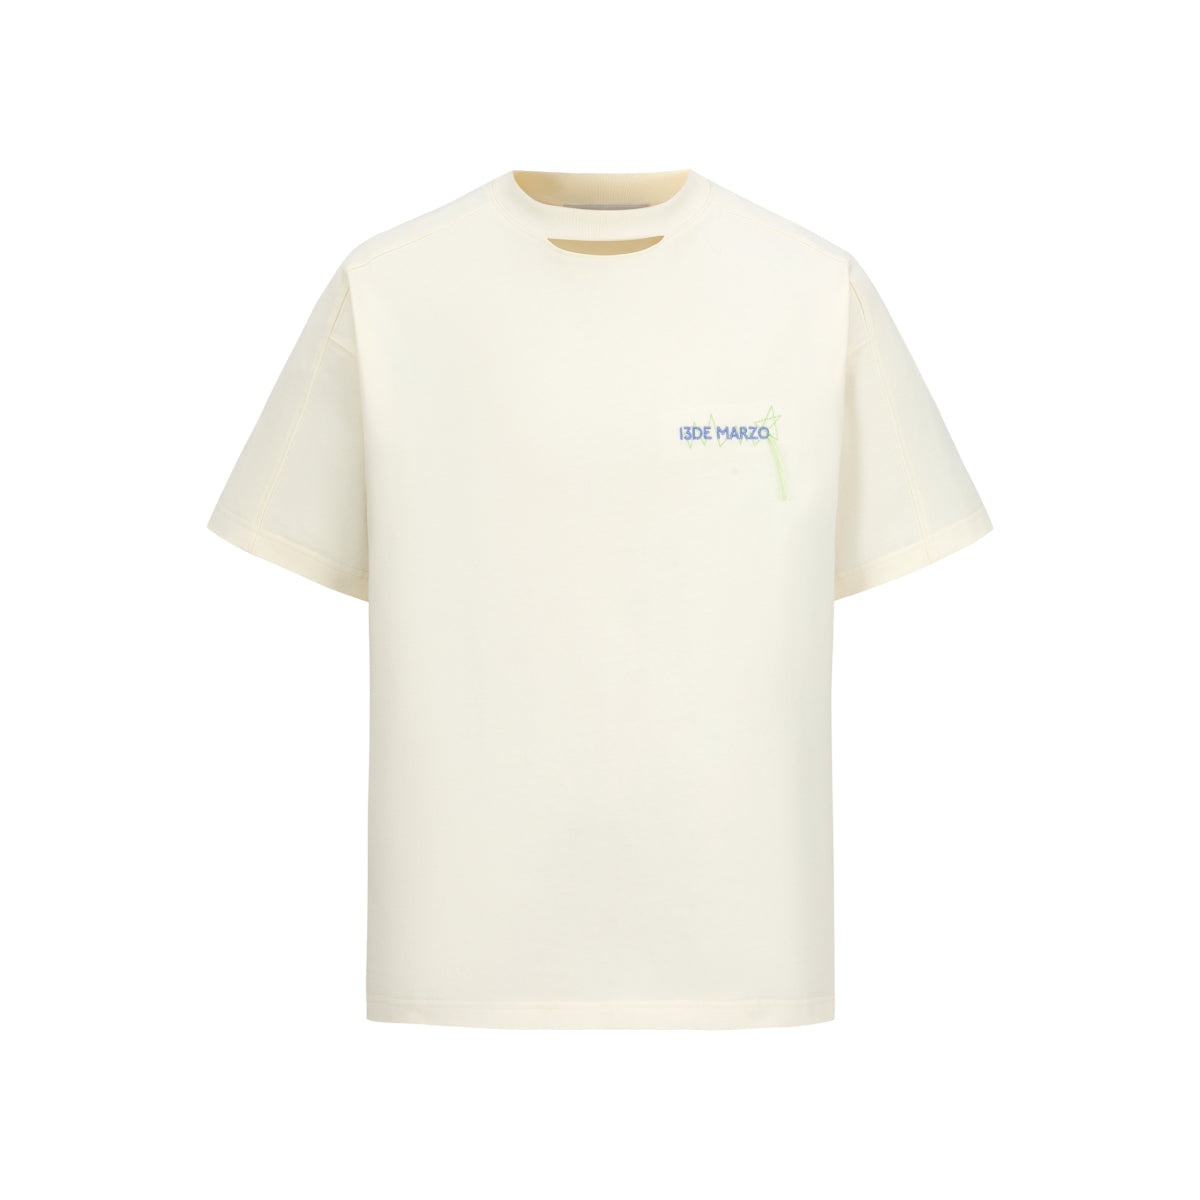 13DE MARZO Doozoo Logo Colored Line T-Shirt White